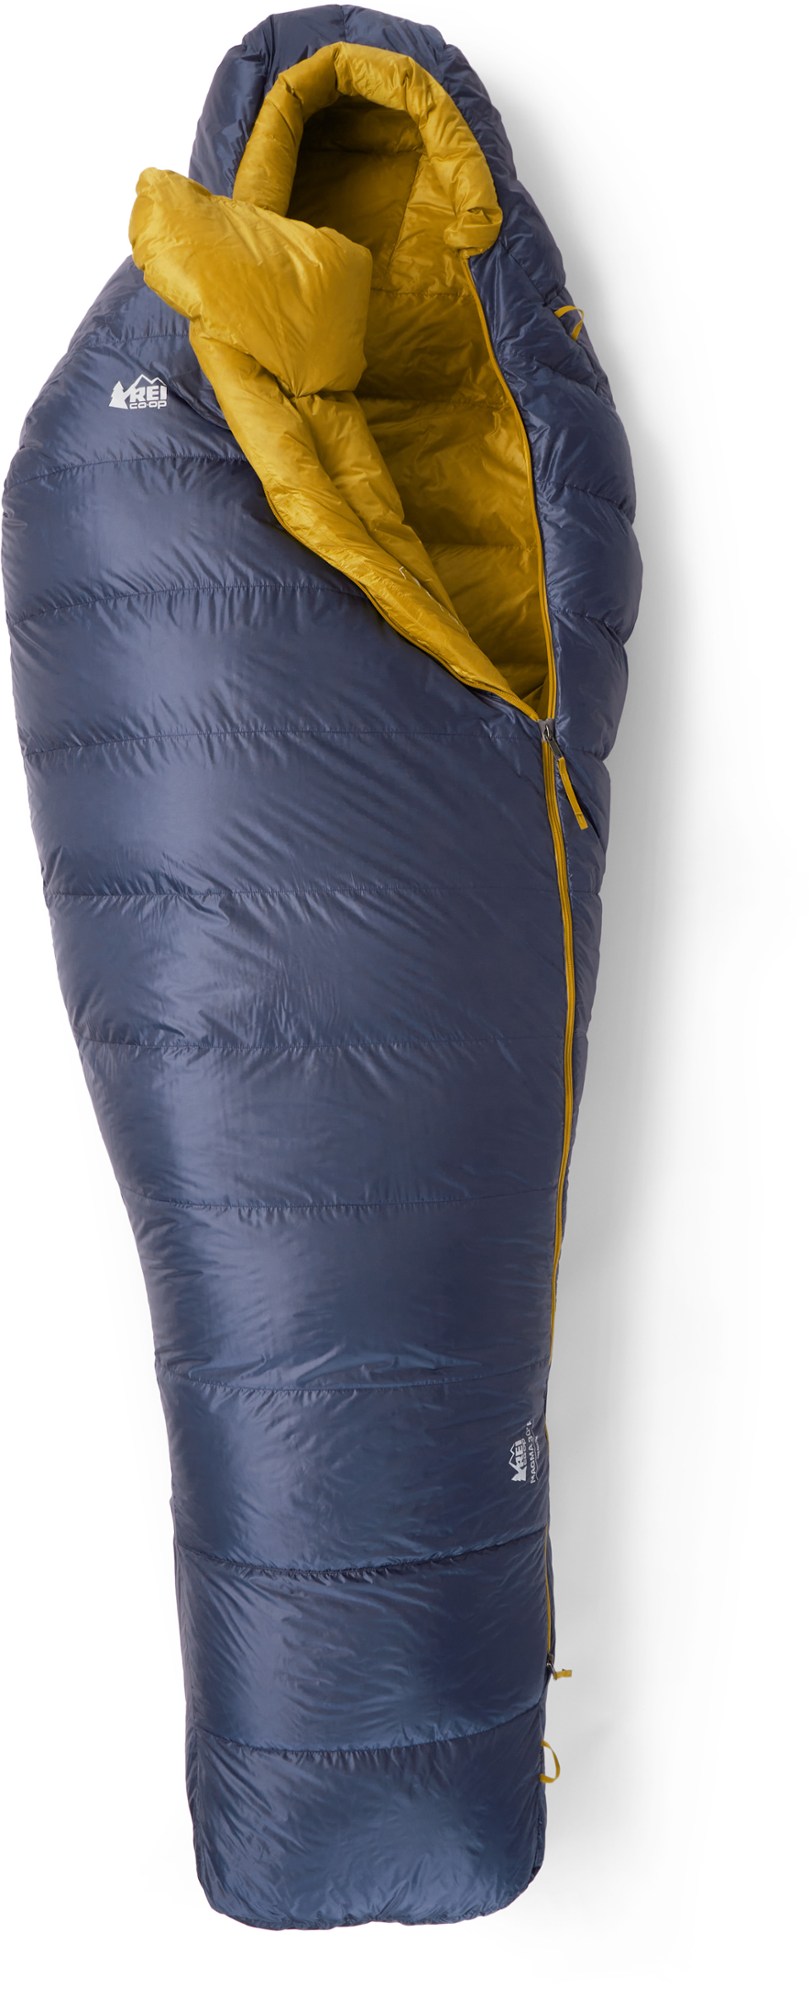 REI Magma sleeping bag